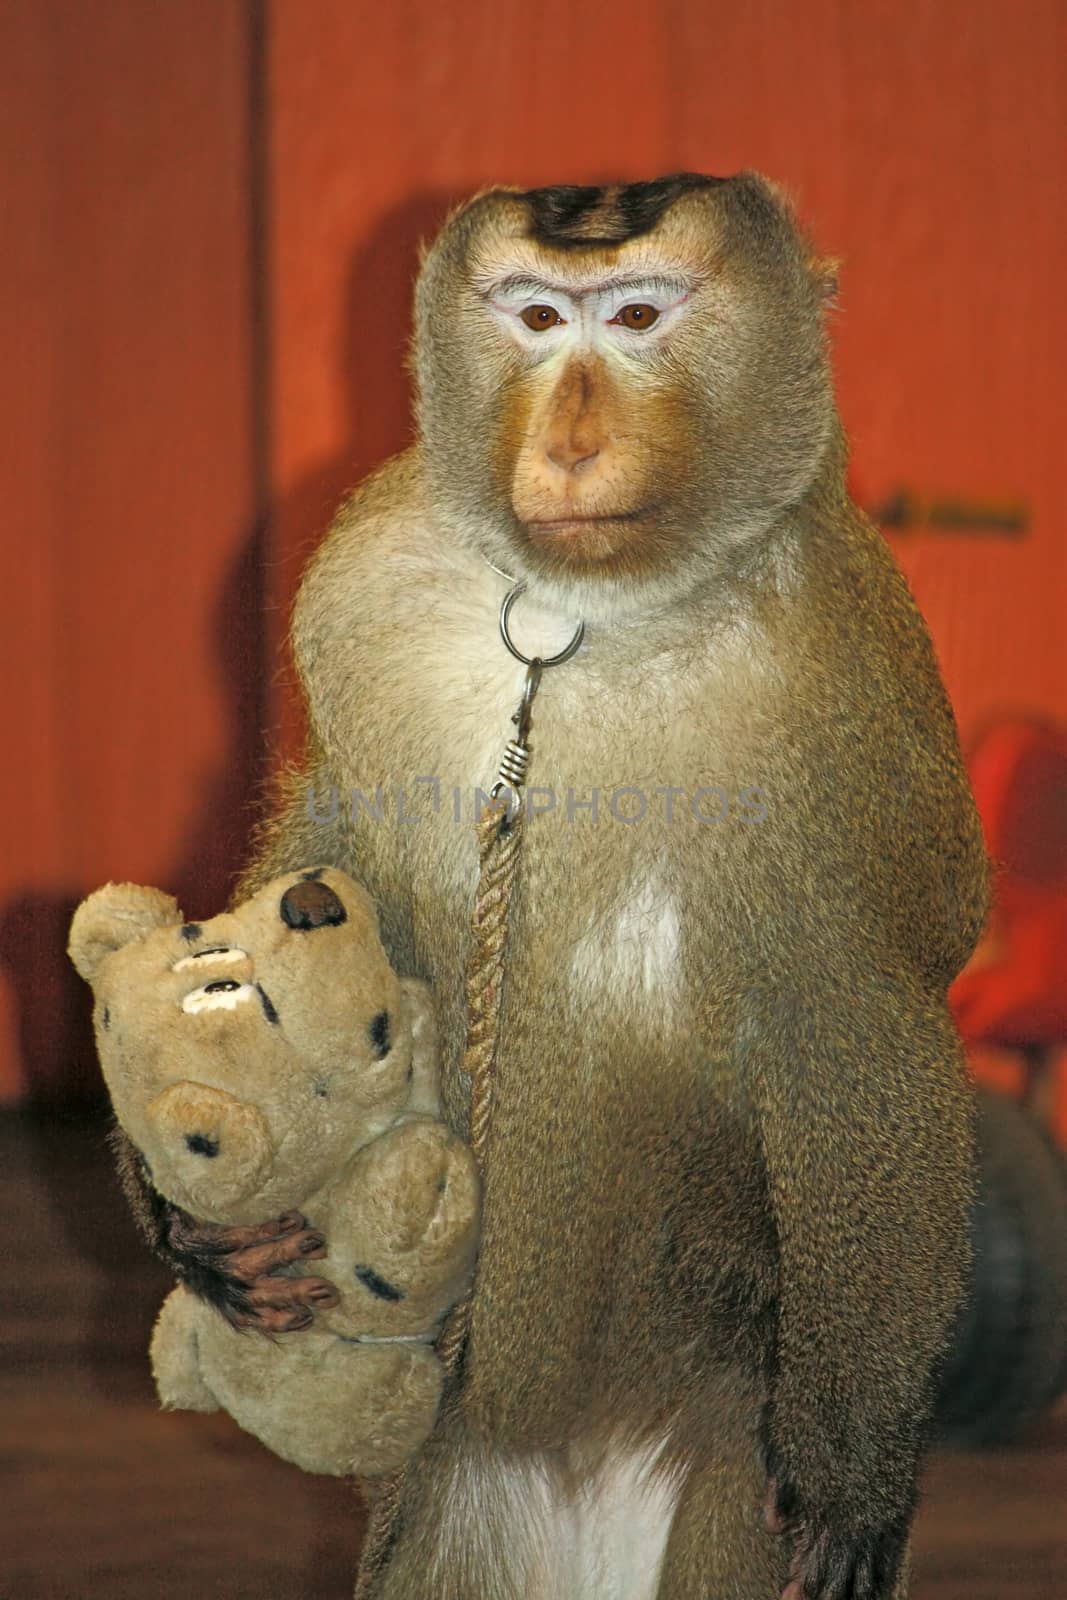 Monkey with toy closeup, zoo, Thailand.